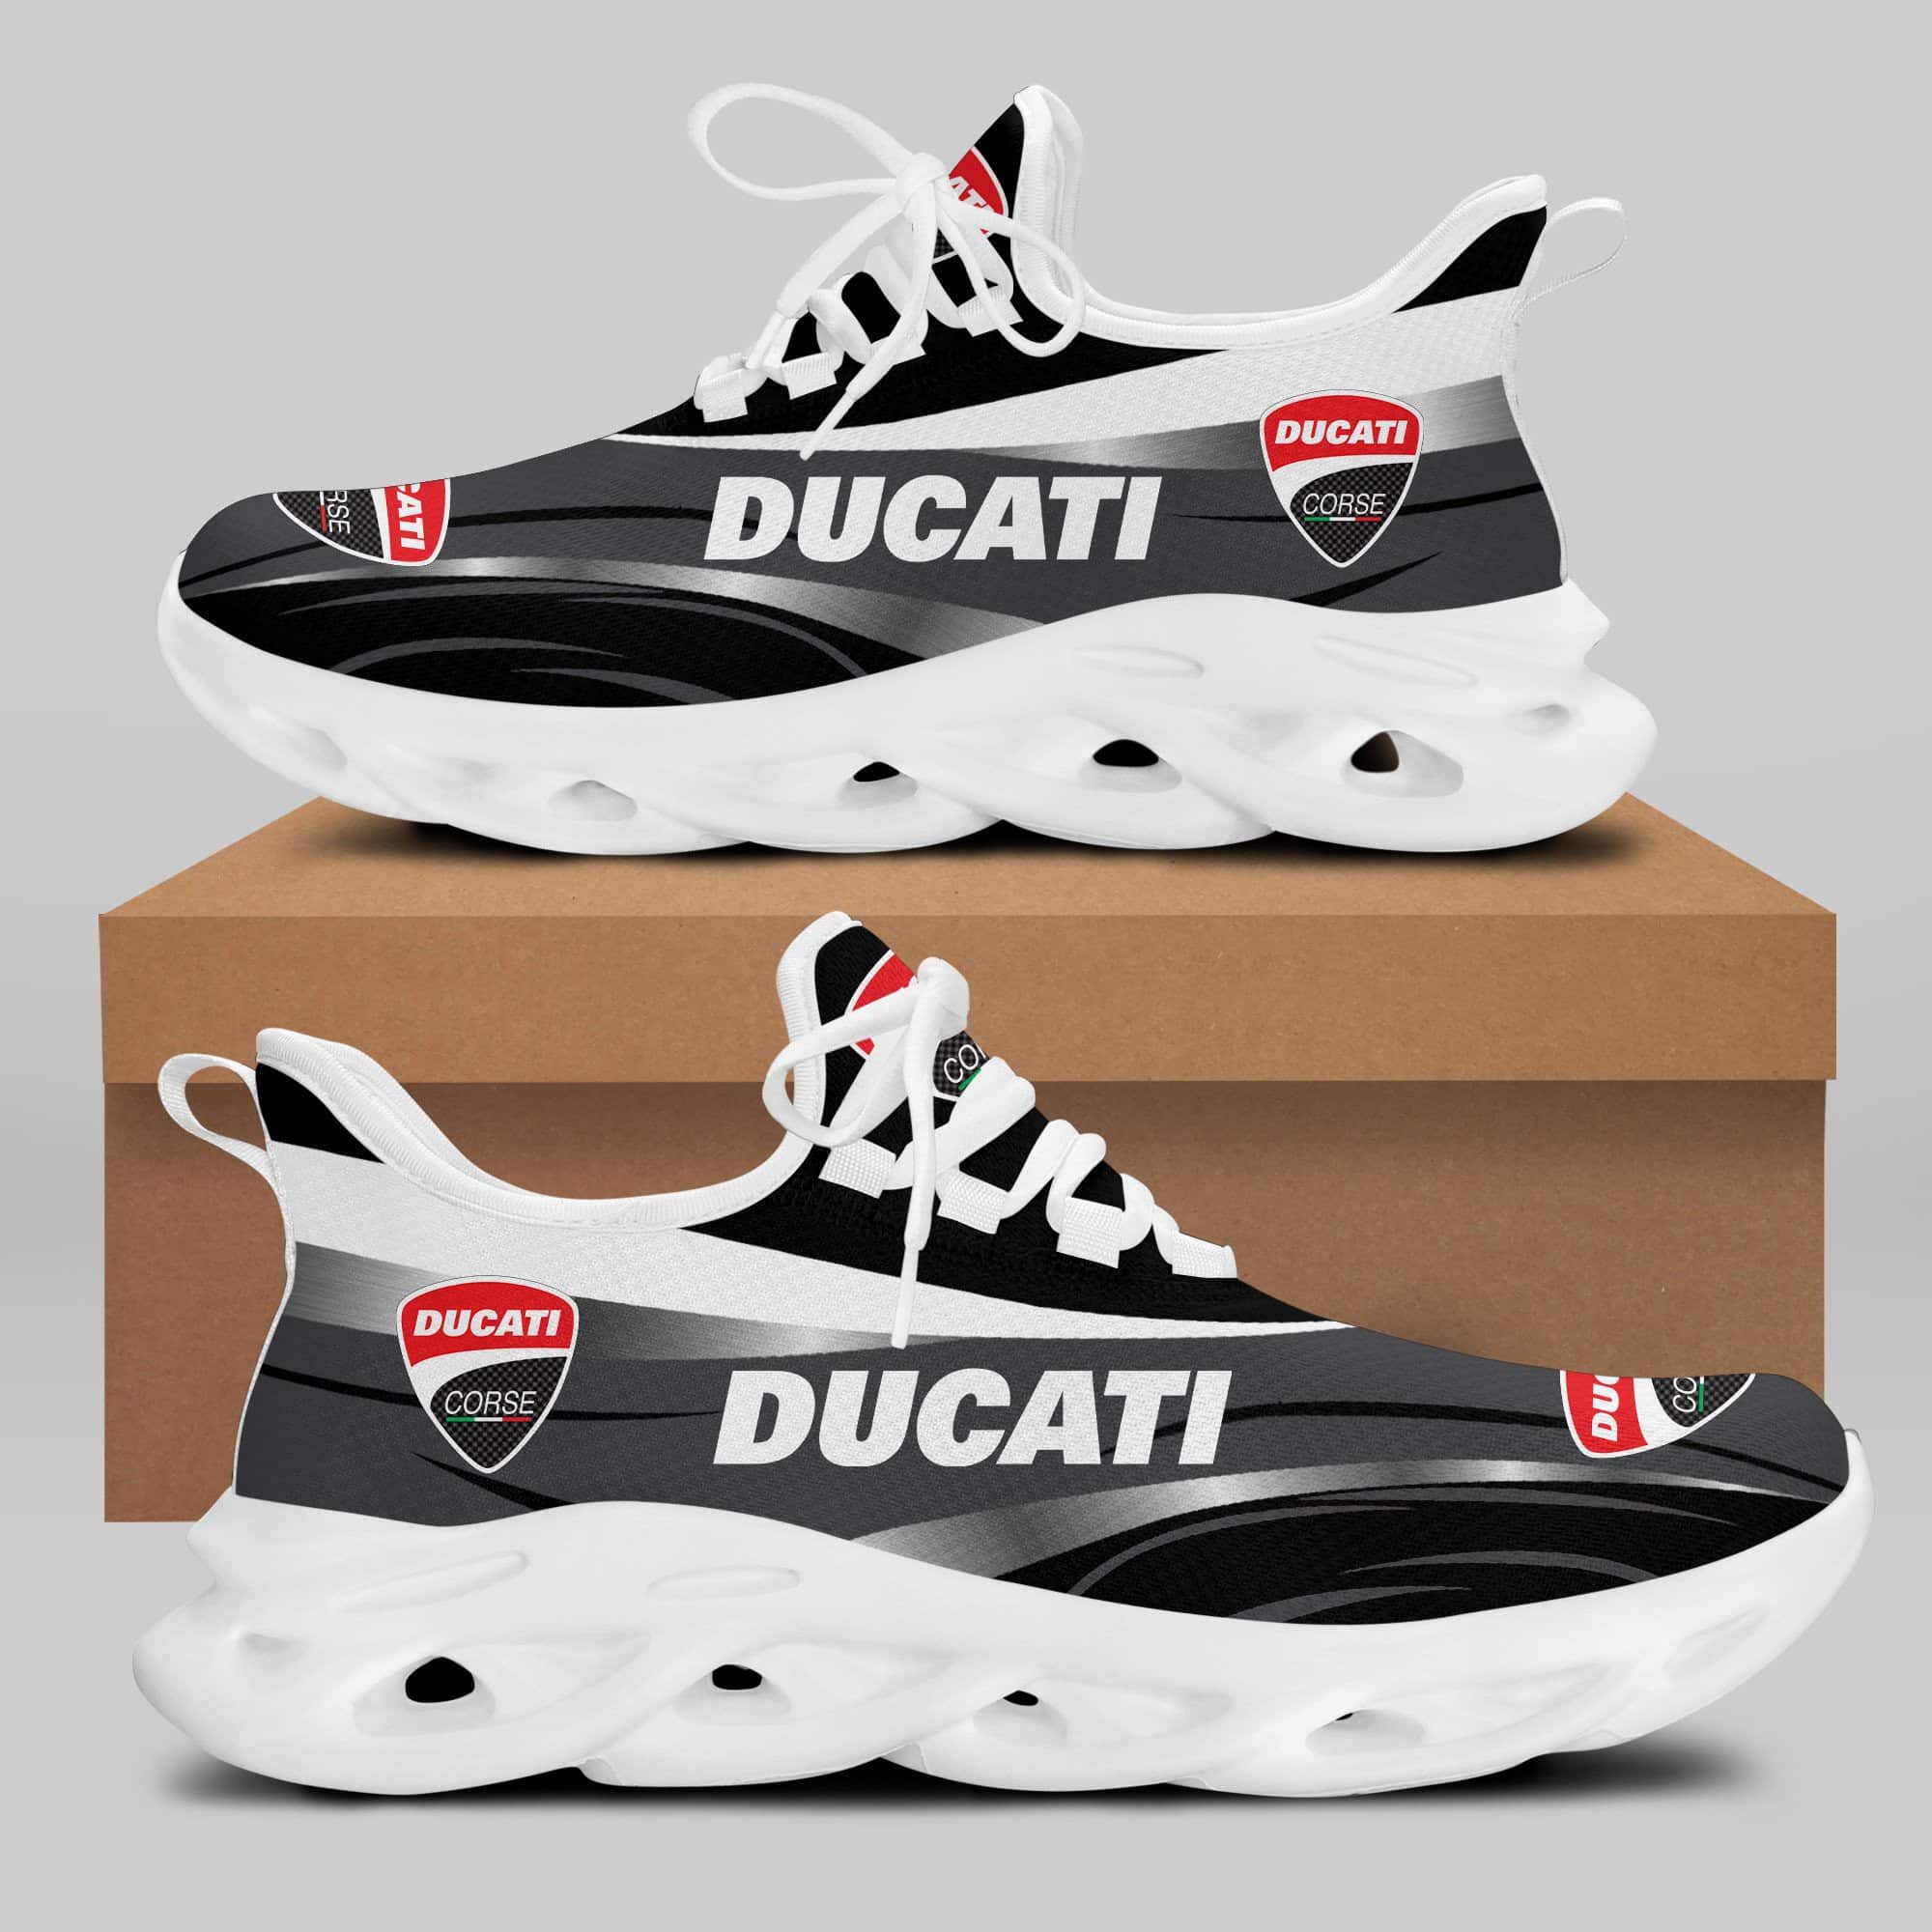 Ducati Racing Running Shoes Max Soul Shoes Sneakers Ver 53 2